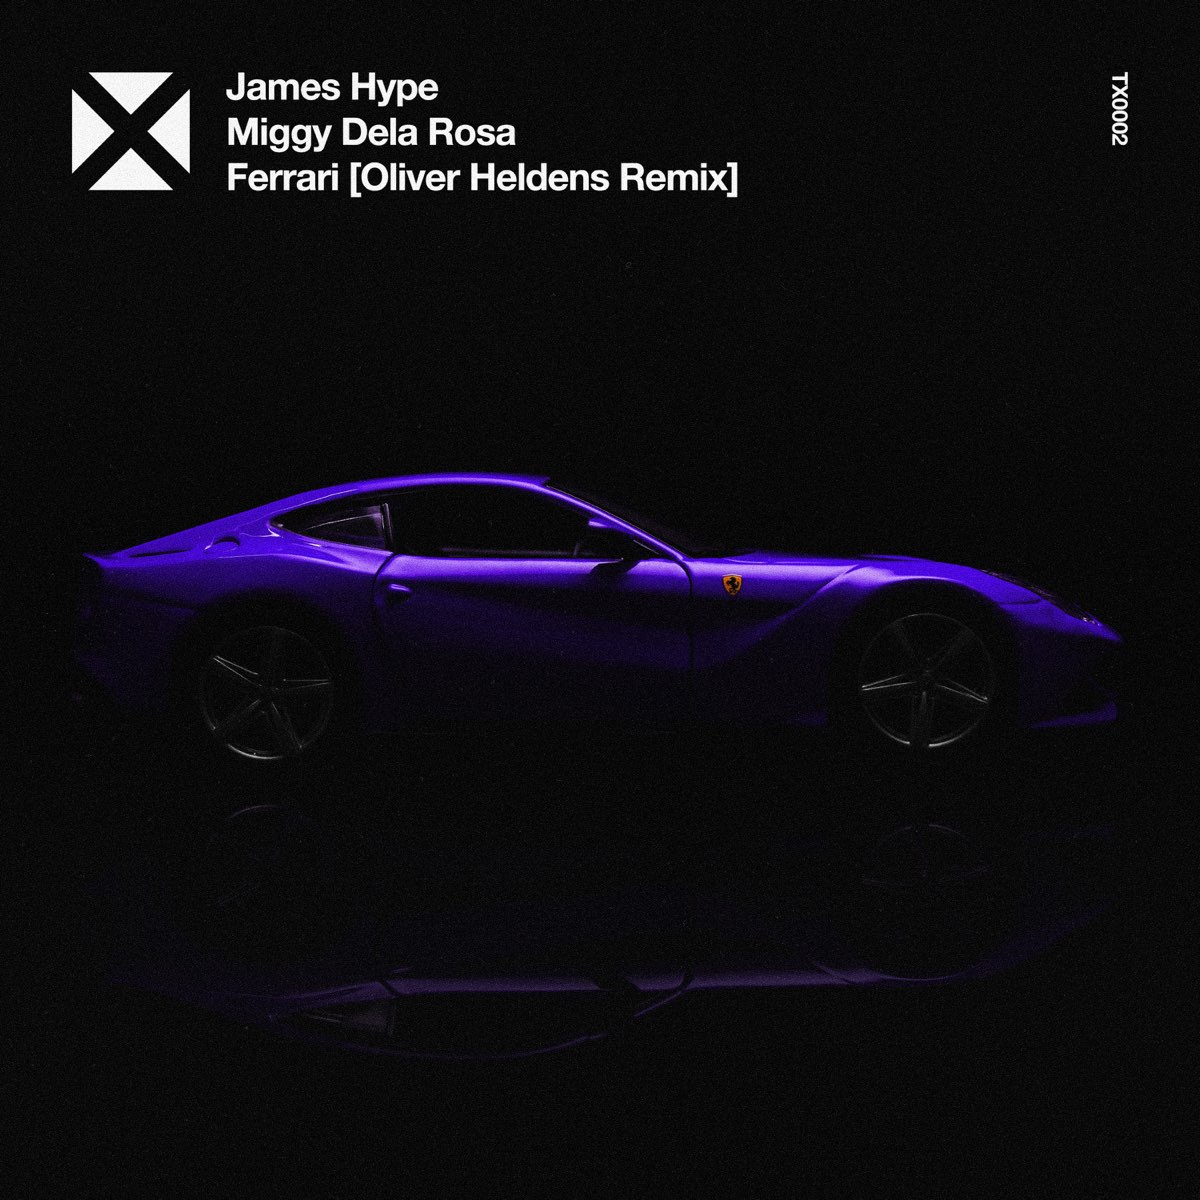 James Hype Ferrari Heldens Extended Remix. James Hype feat. Miggy dela Rosa - Ferrari. Ferrari James Hype Maggi Delarosa. James Hype, Miggy dela Rosa Ferrari (DJ Dark & mentol Remix). James hype ferrari